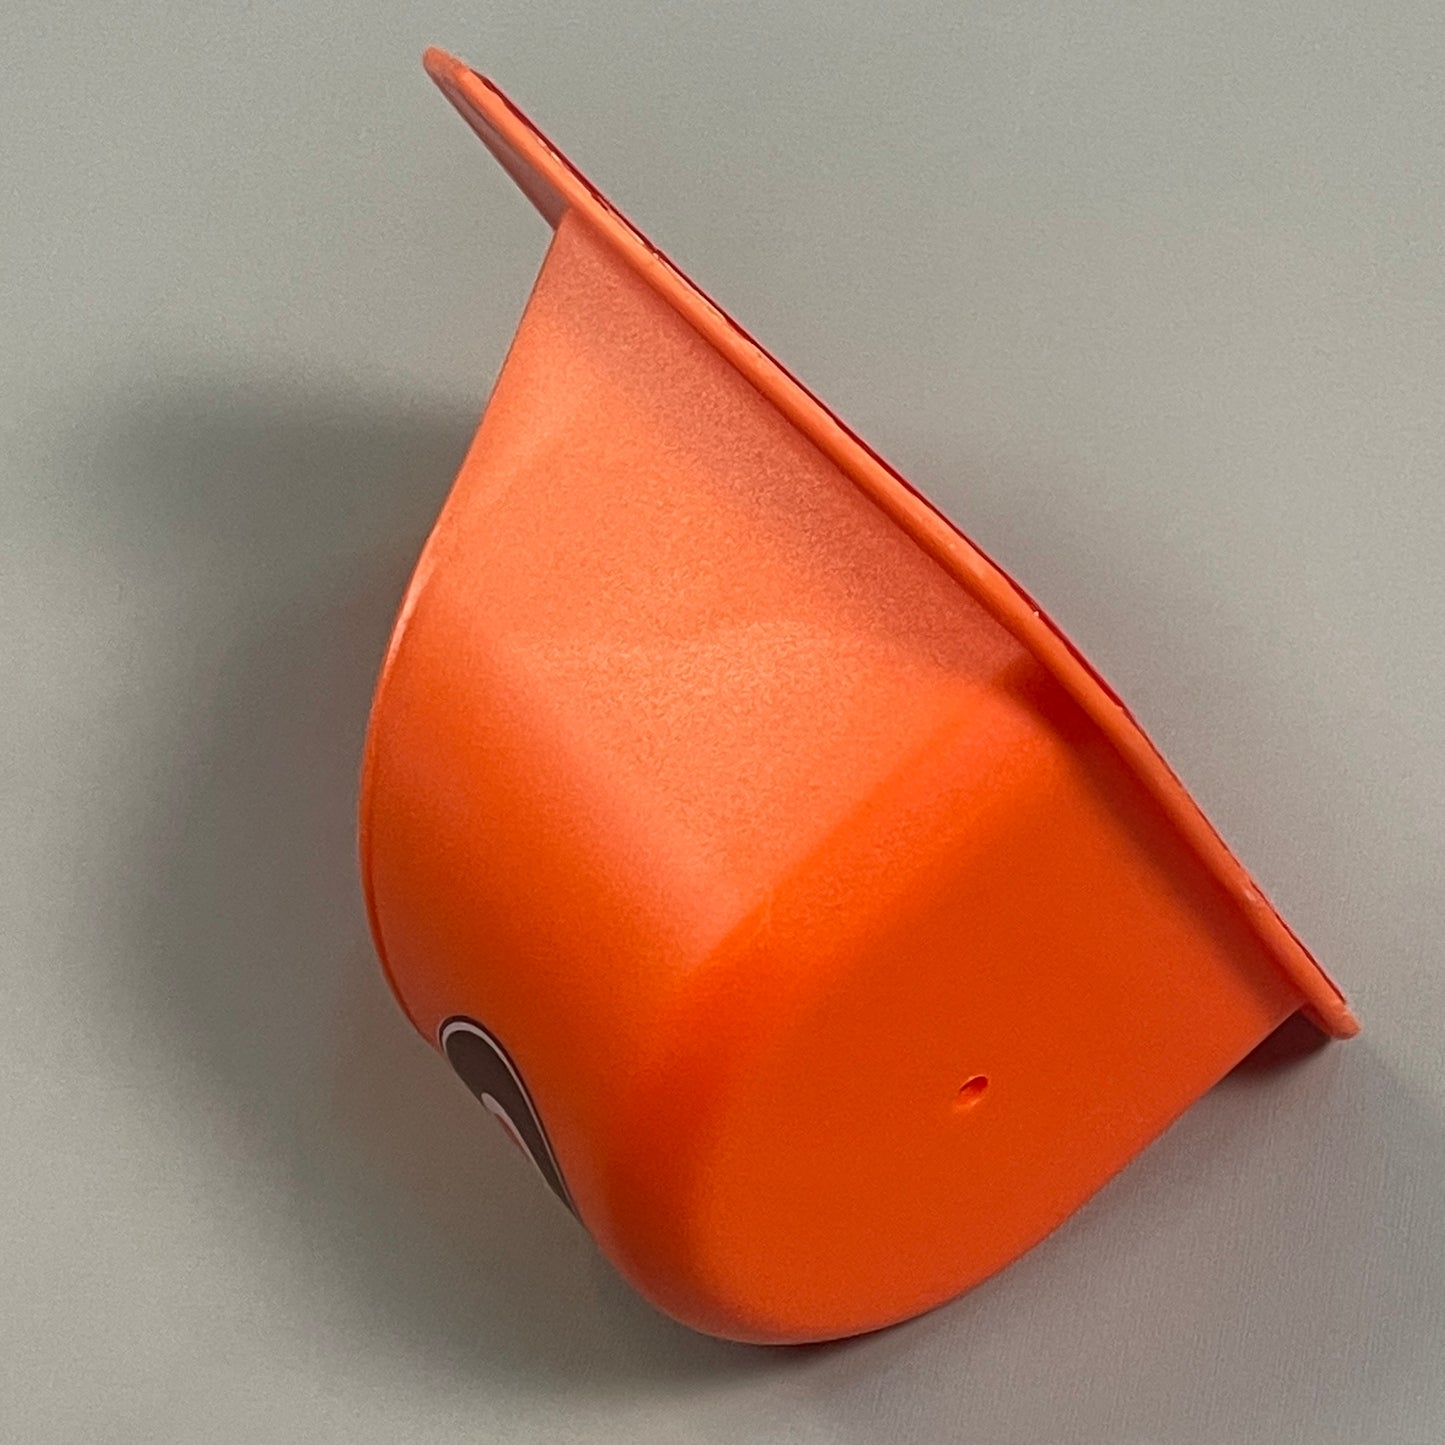 PHILADELPHIA FLYERS Shower Can Holder by DESTROYER ROCKS Orange (New)